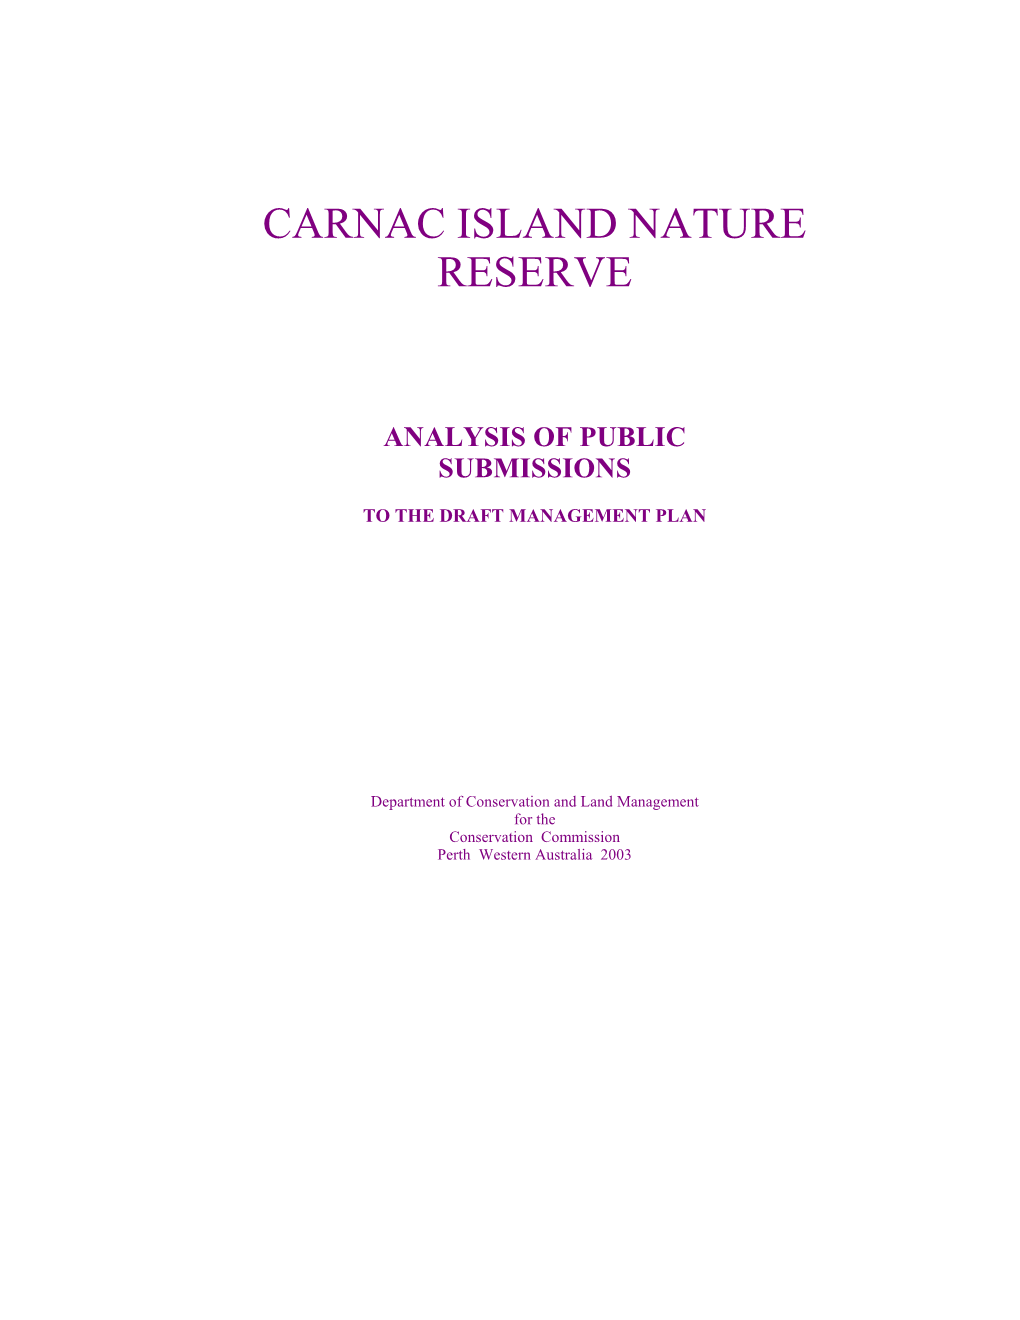 Carnac Island Nature Reserve